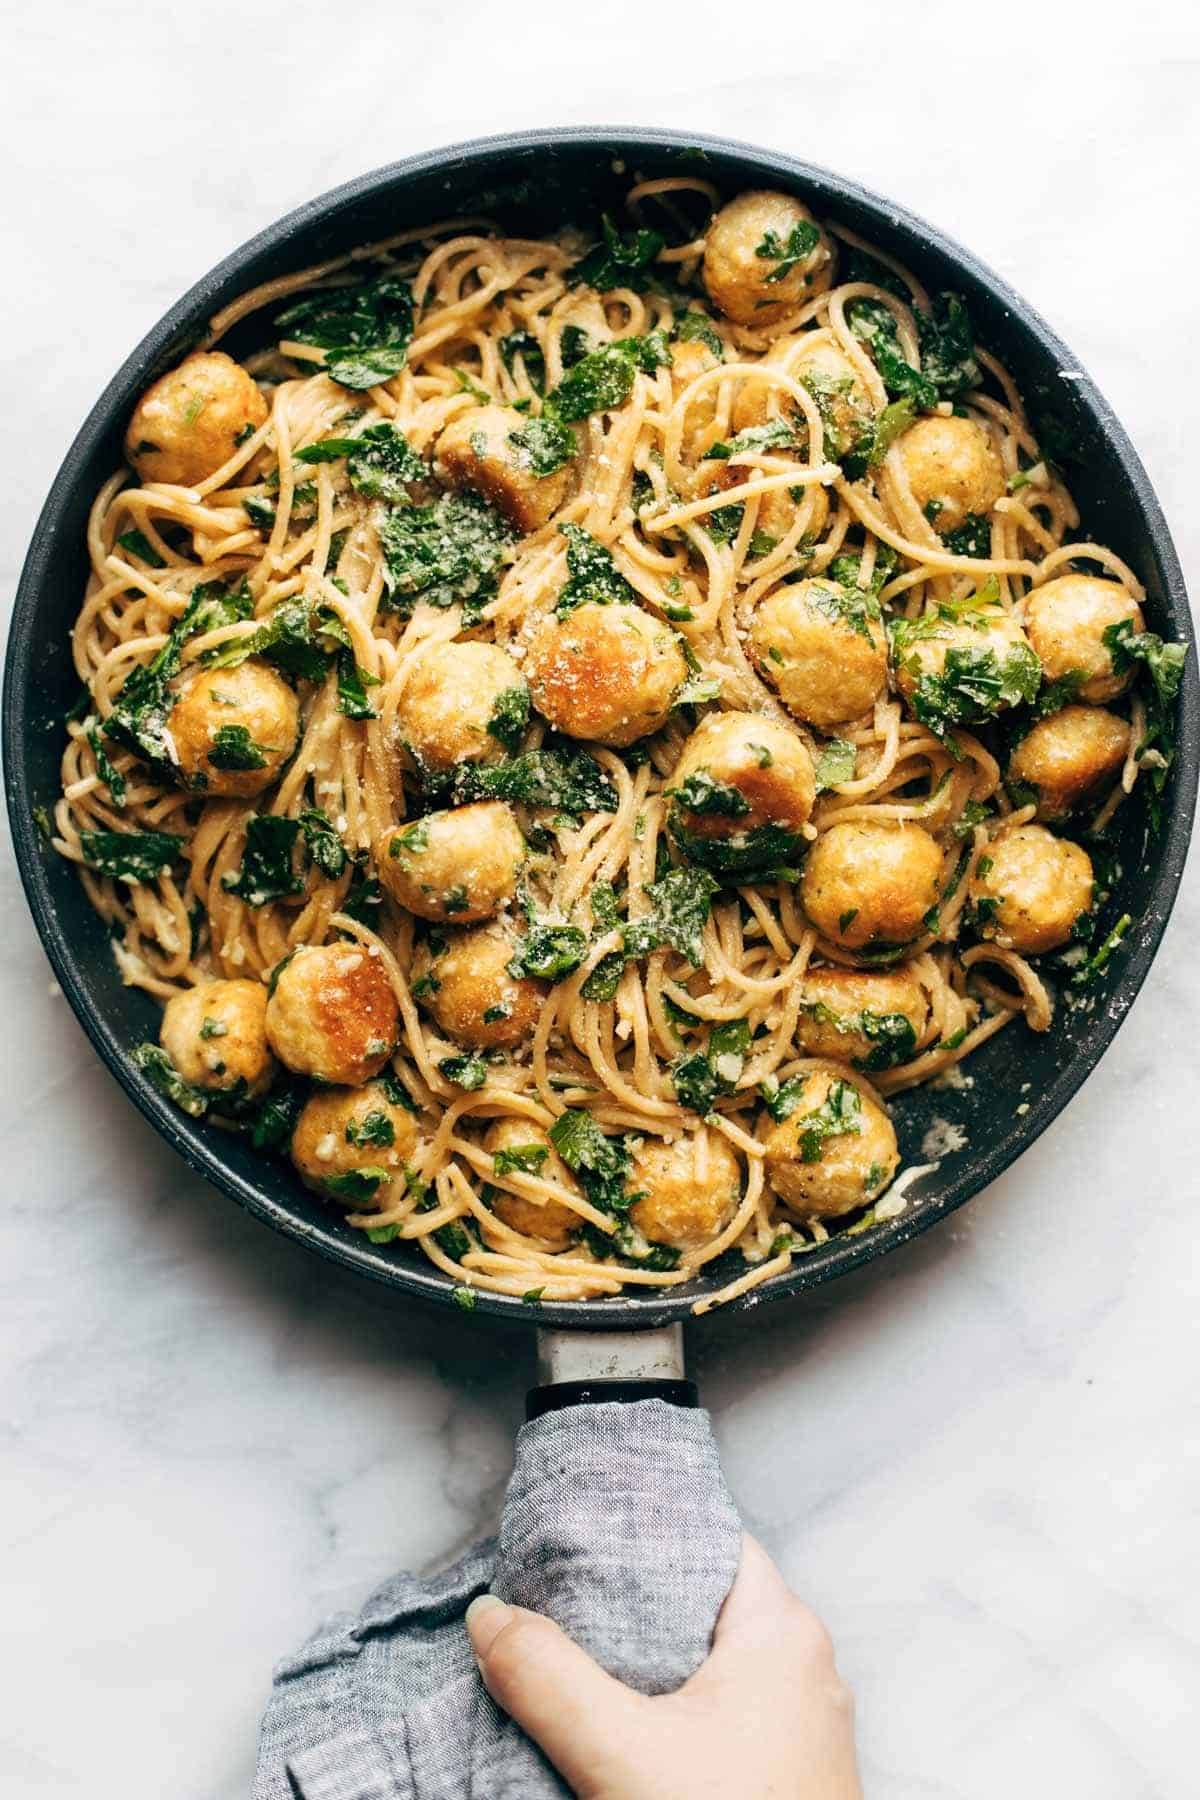 Garlic herb spaghetti and meatballs in a pan.